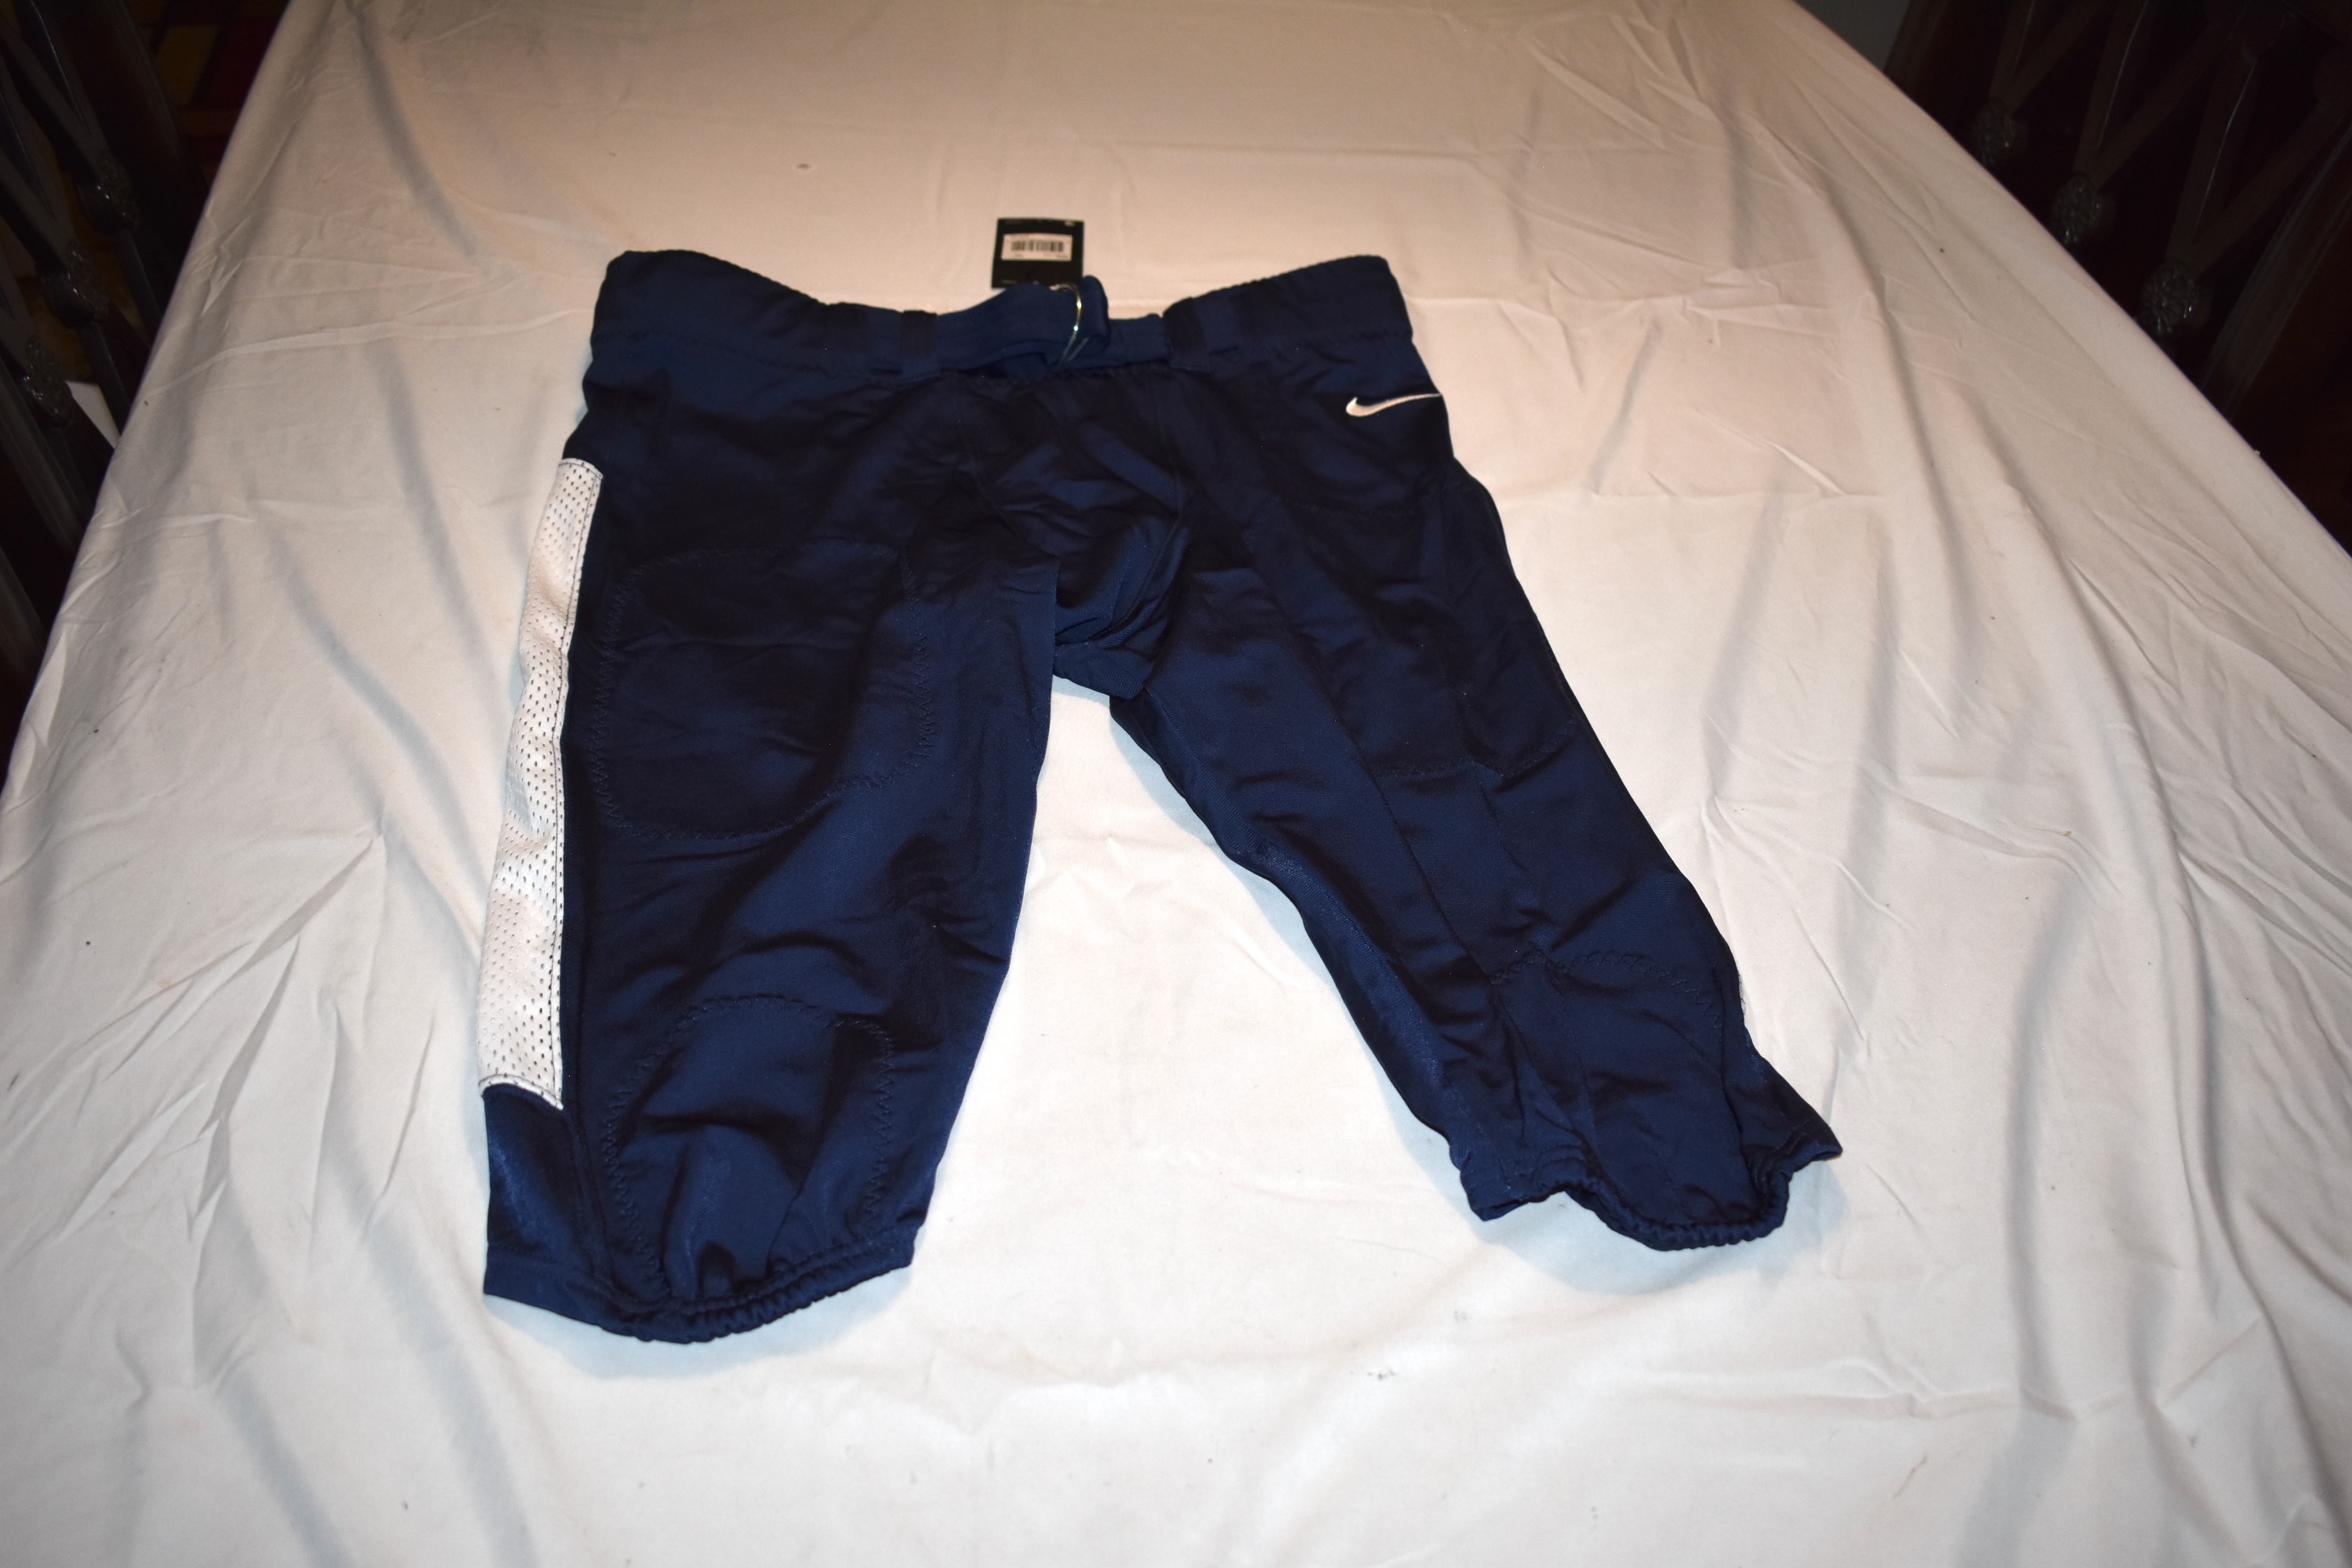 NEW - Nike Vapor Vented Performance Football Pants, Blue/White, XXL - NWT